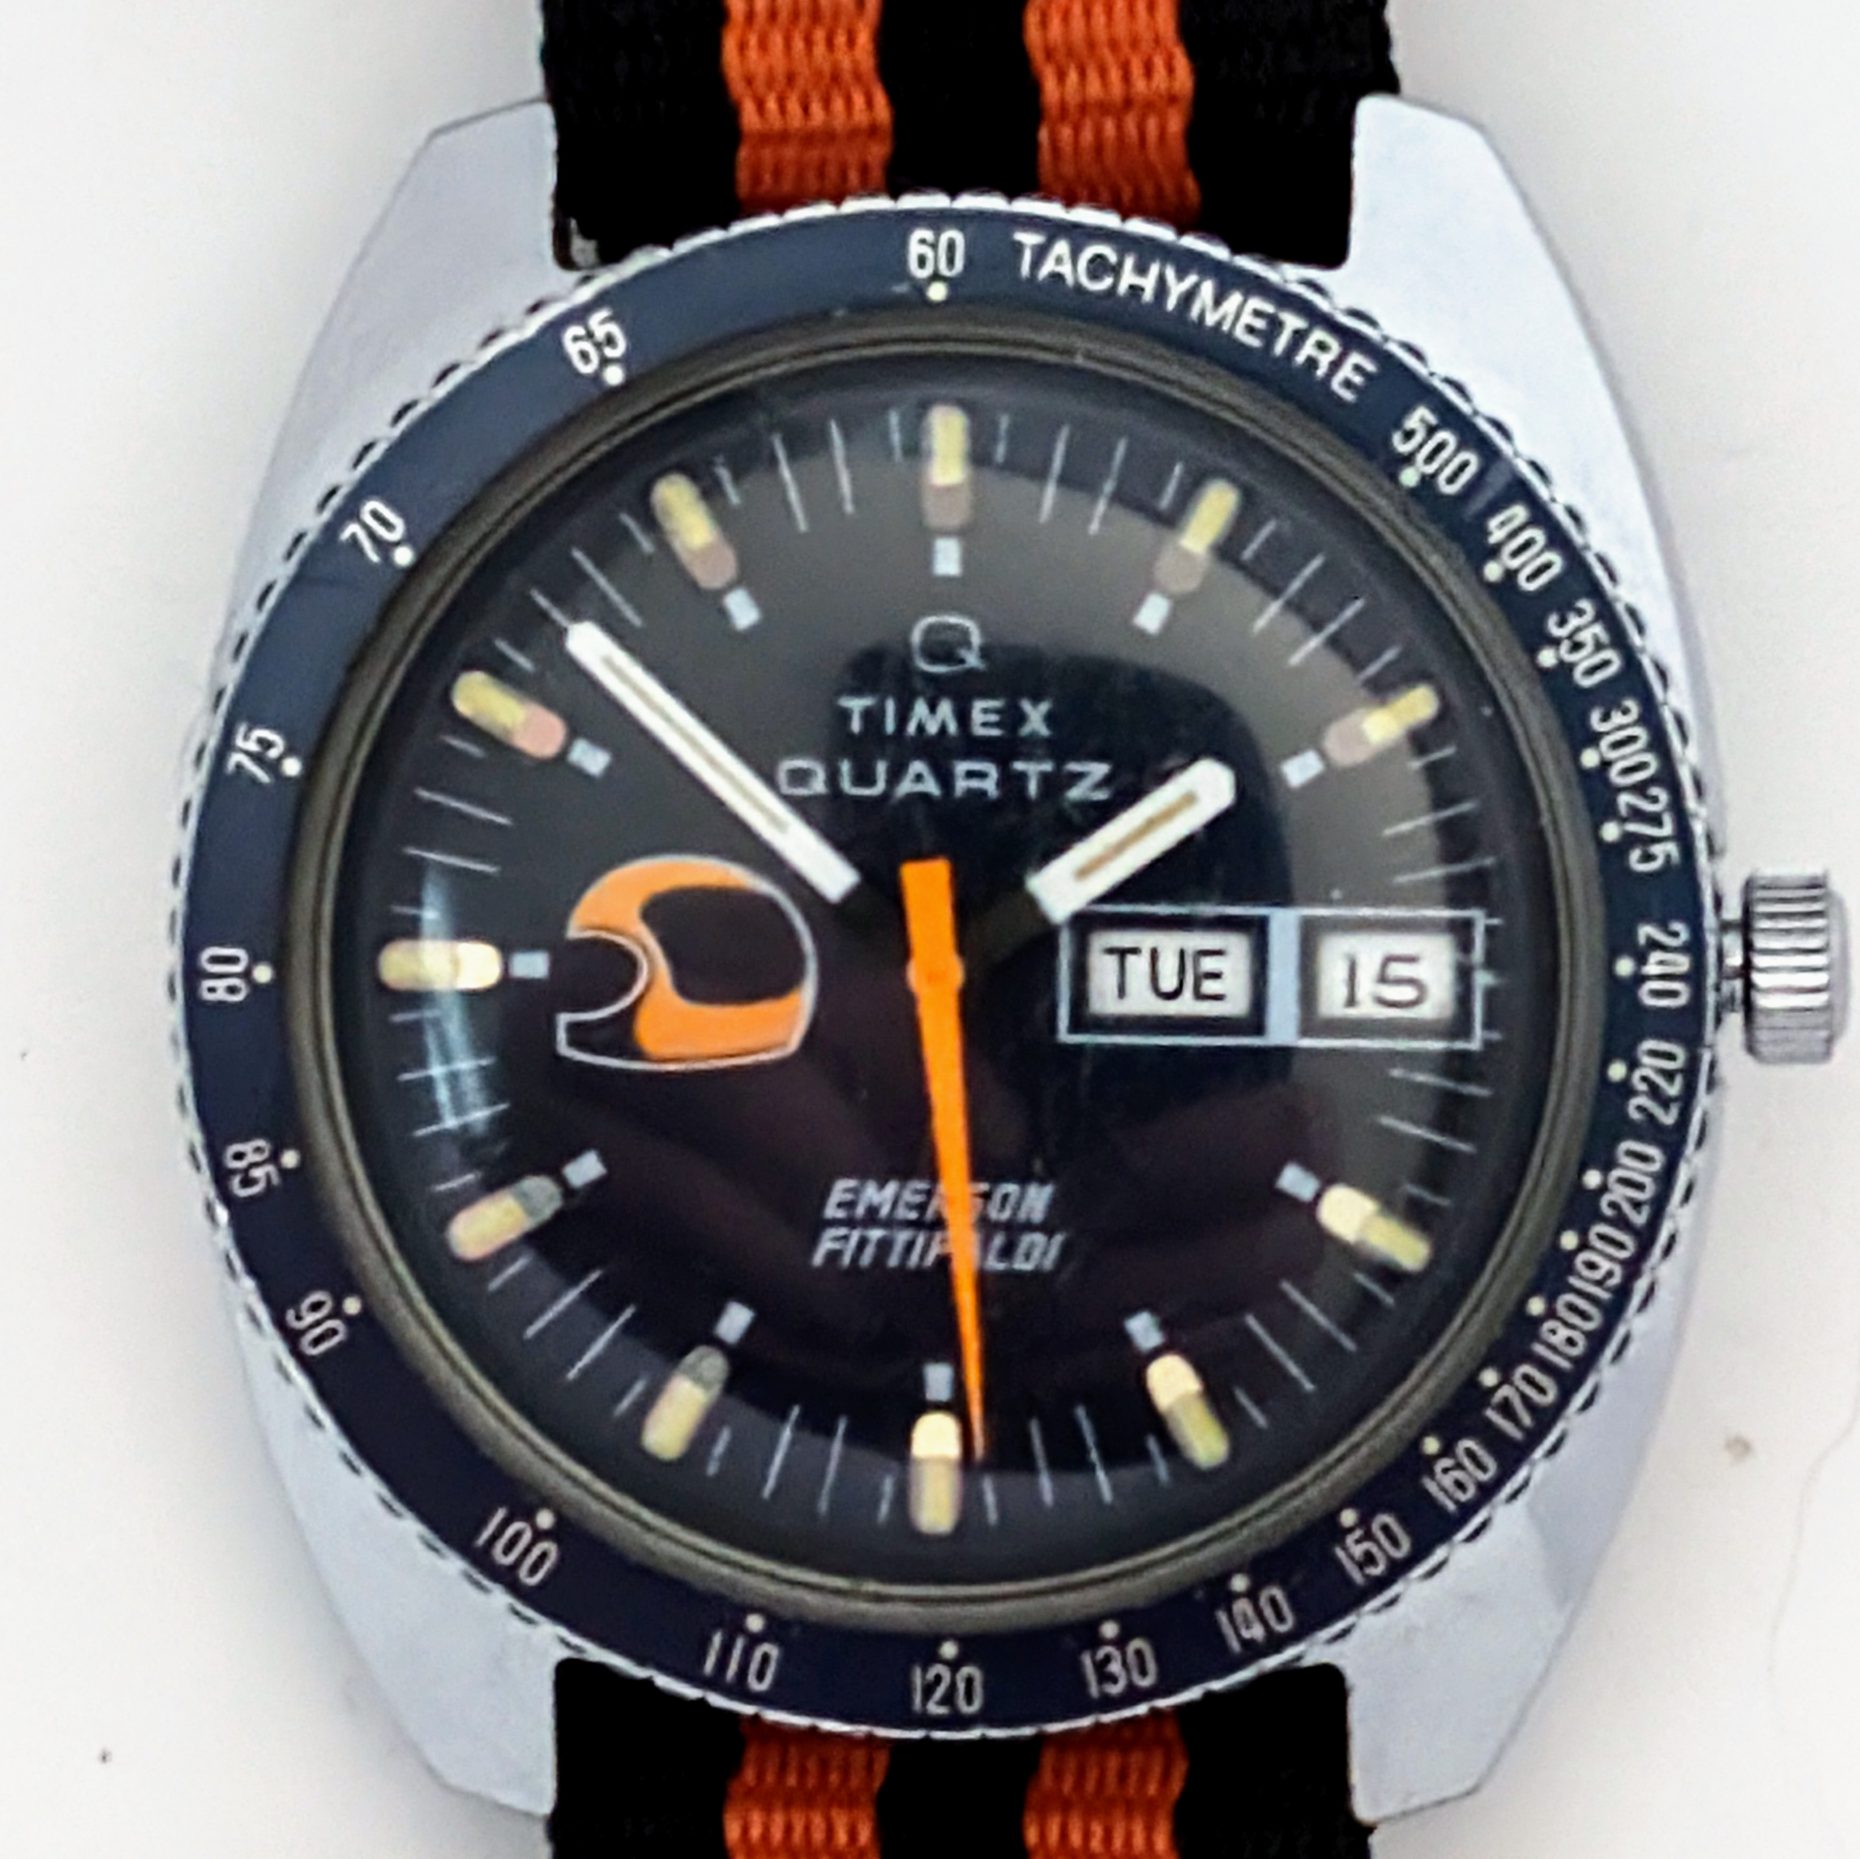 Timex Q Quartz 39311 26375 [1975] Emerson Fittipaldi